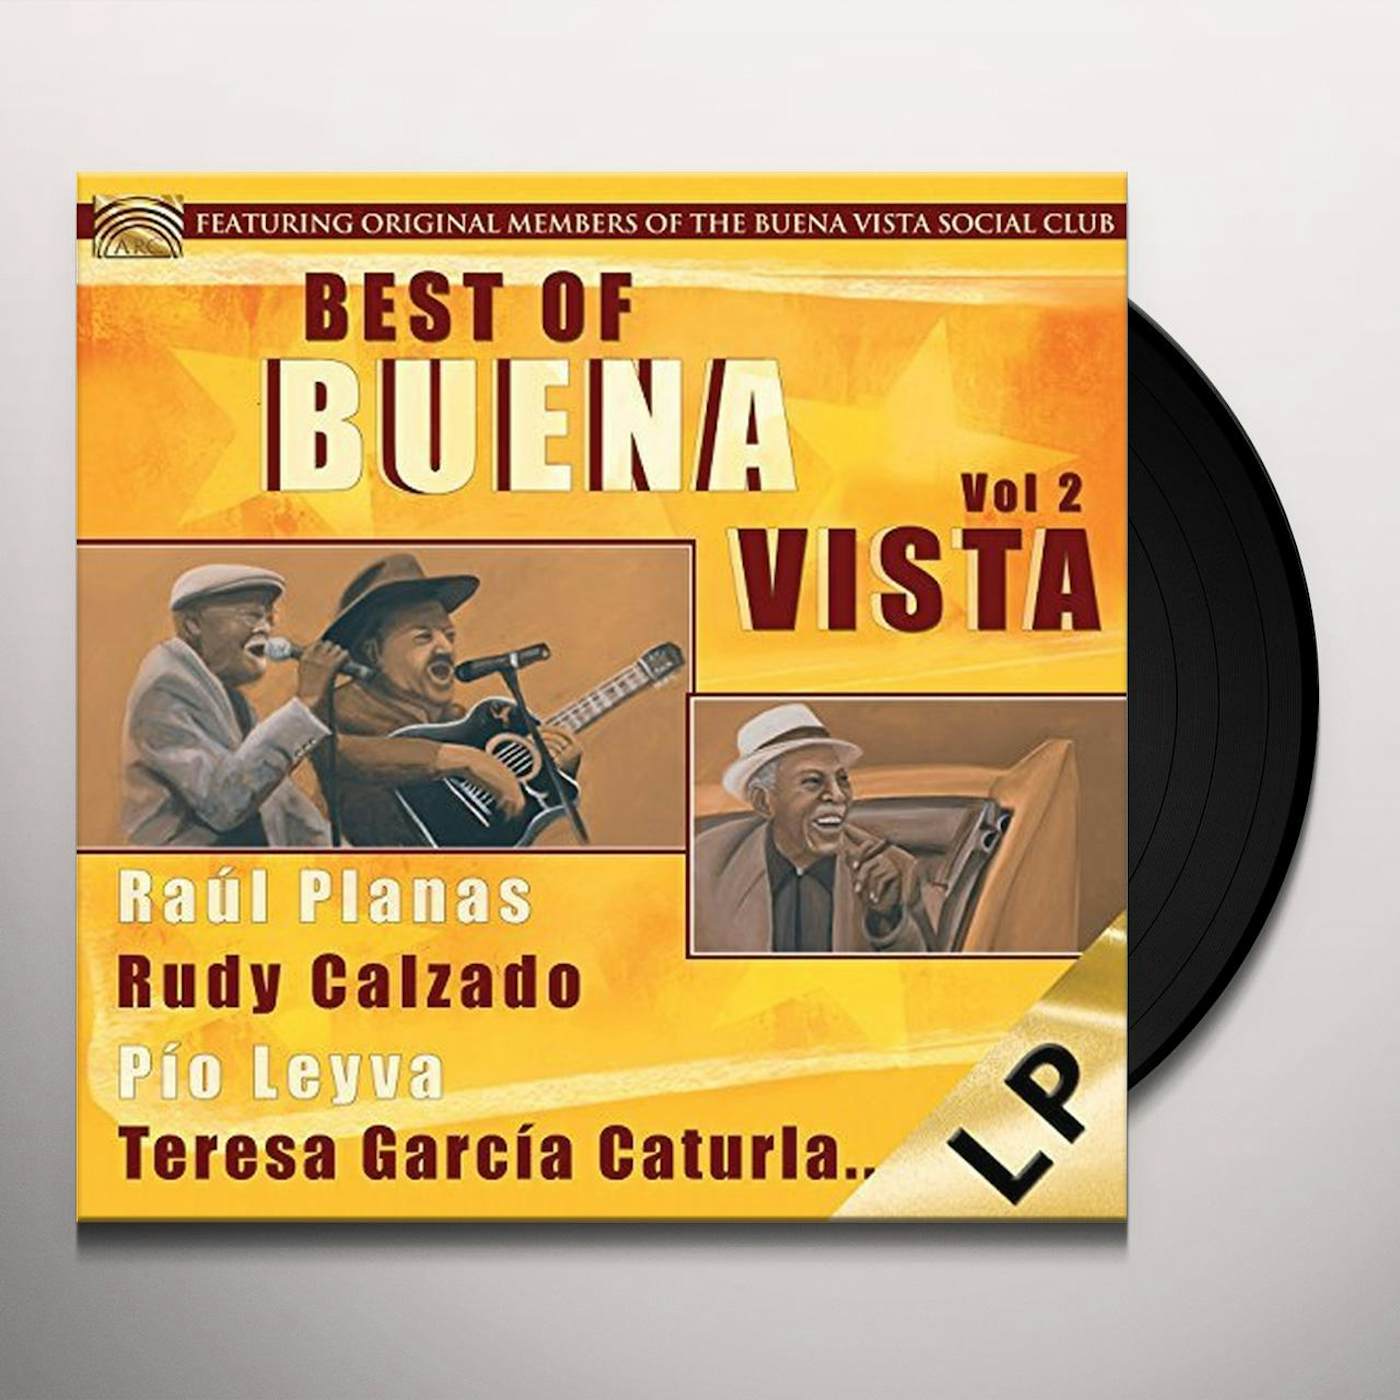 BEST OF BUENA VISTA VOL 2 / VARIOUS Vinyl Record - UK Release